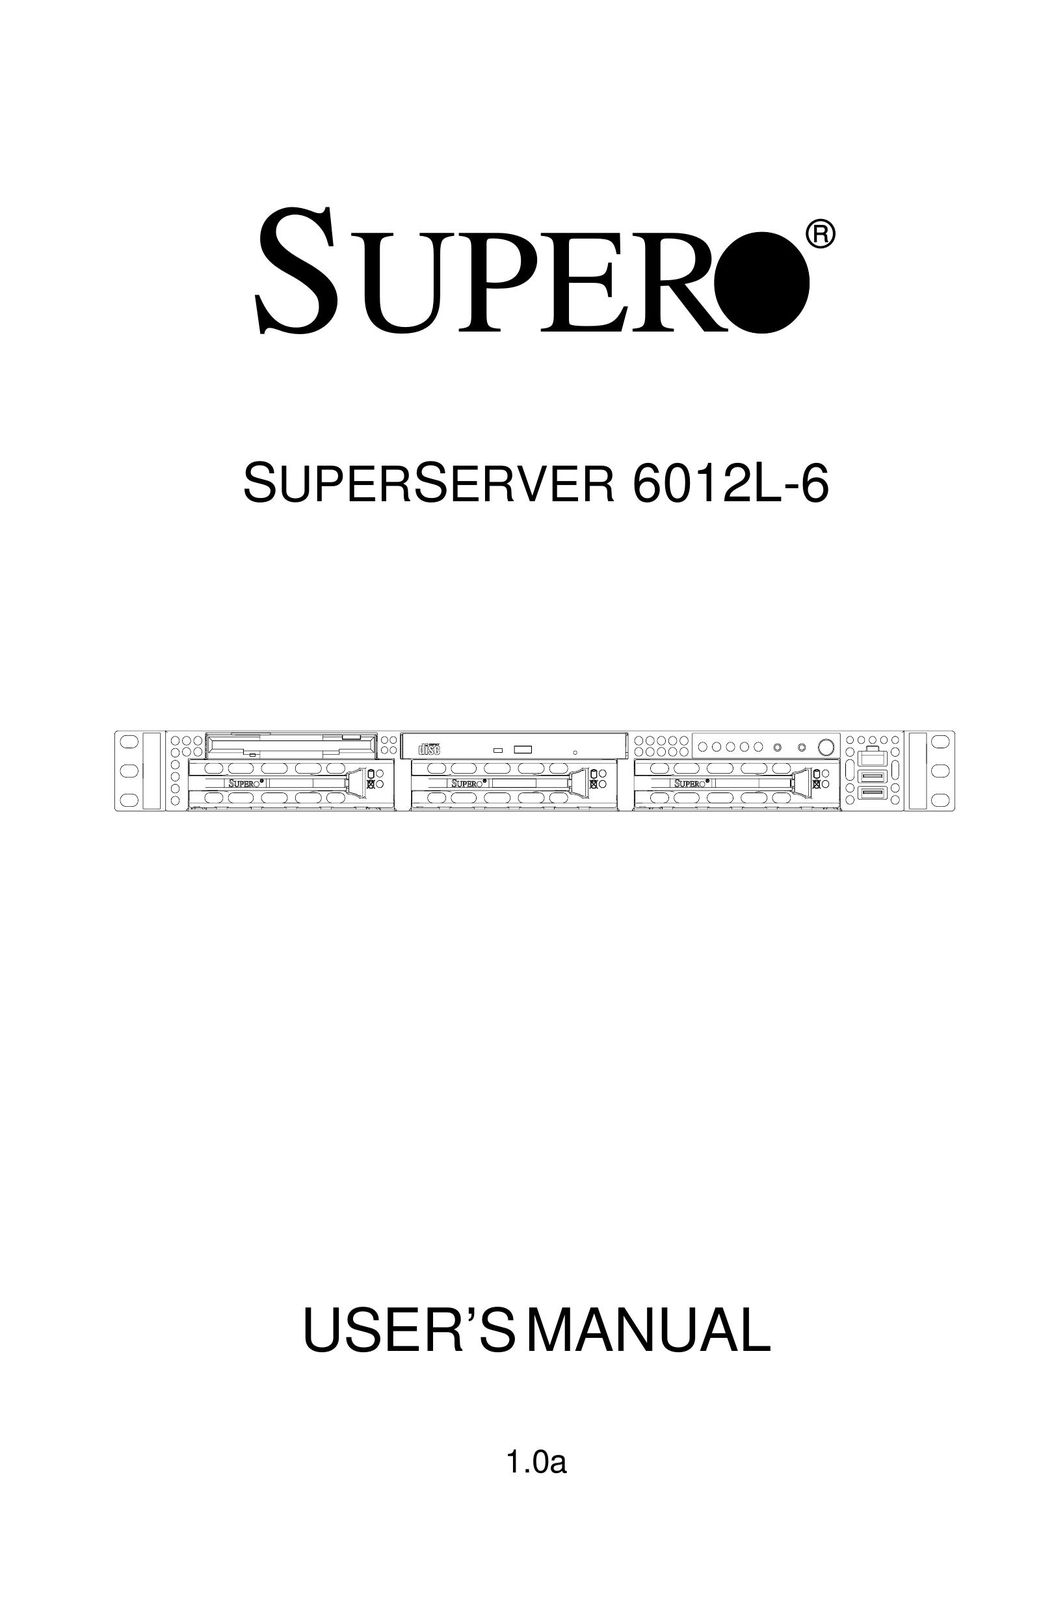 SUPER MICRO Computer 6012L-6 Home Theater Server User Manual